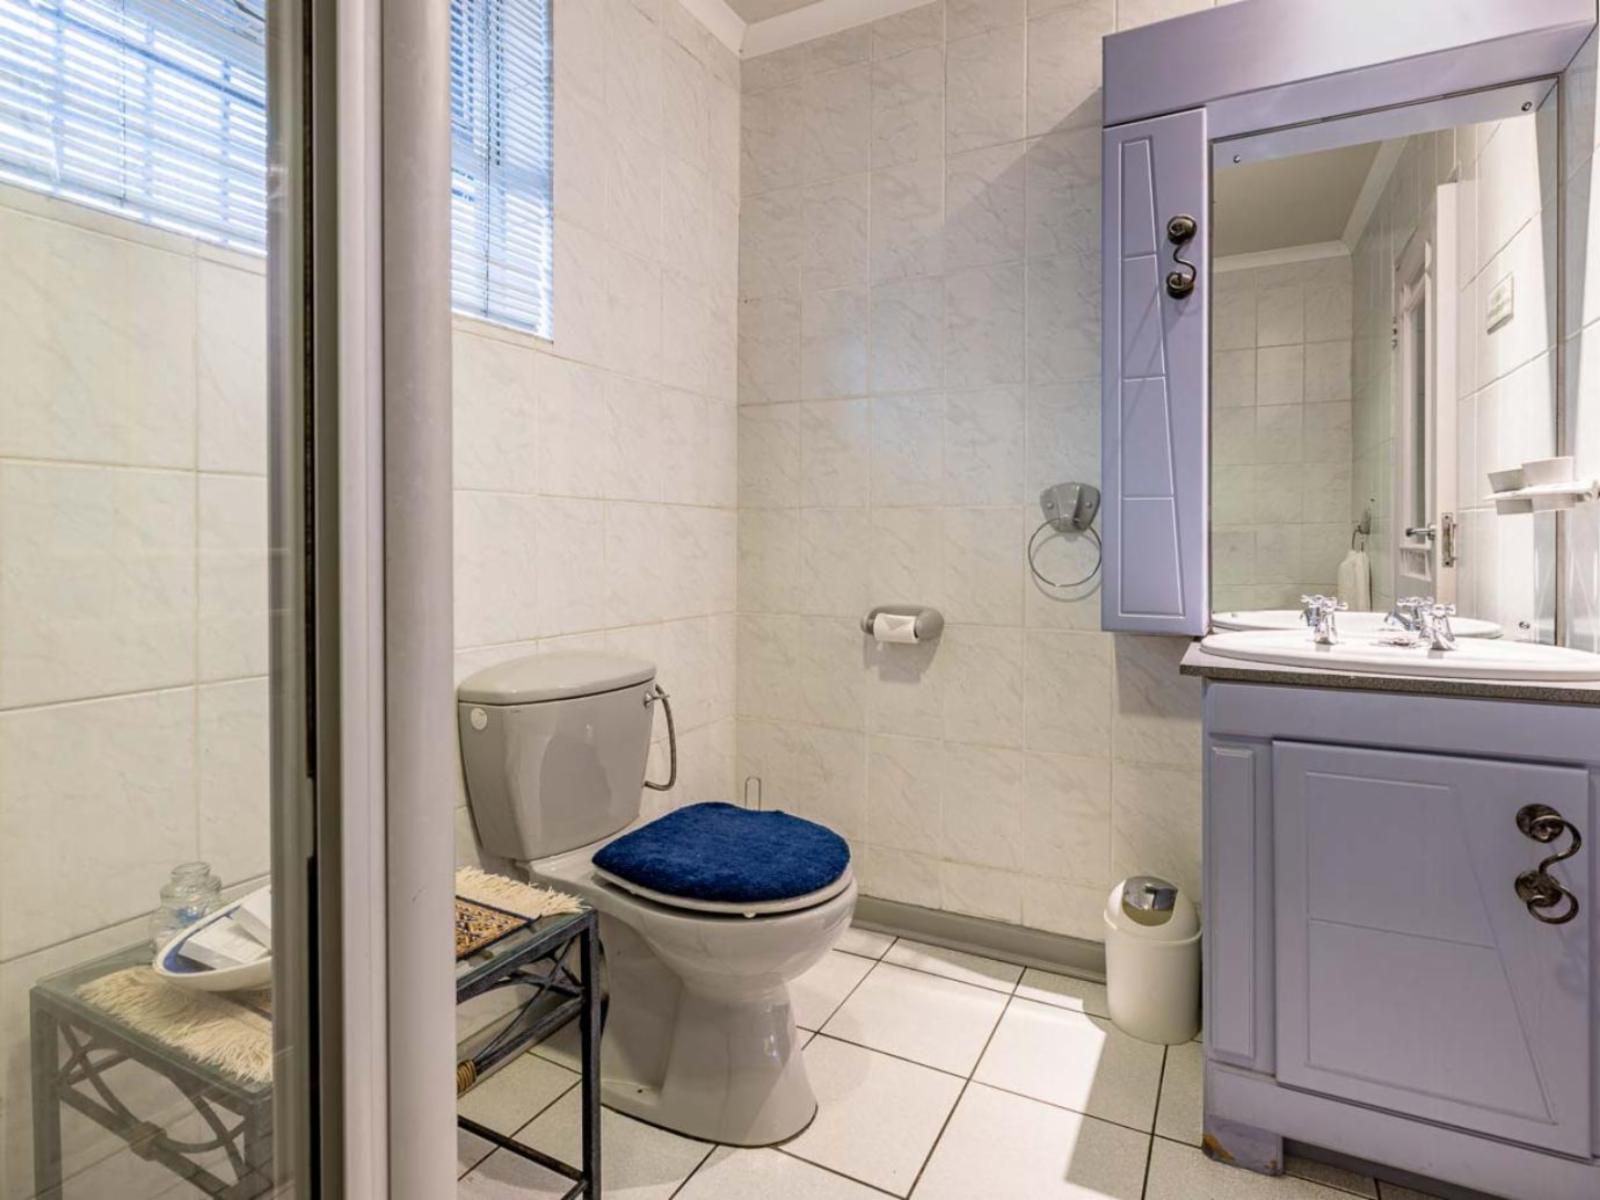 Jorn S Guest House Nelspruit Mpumalanga South Africa Bathroom